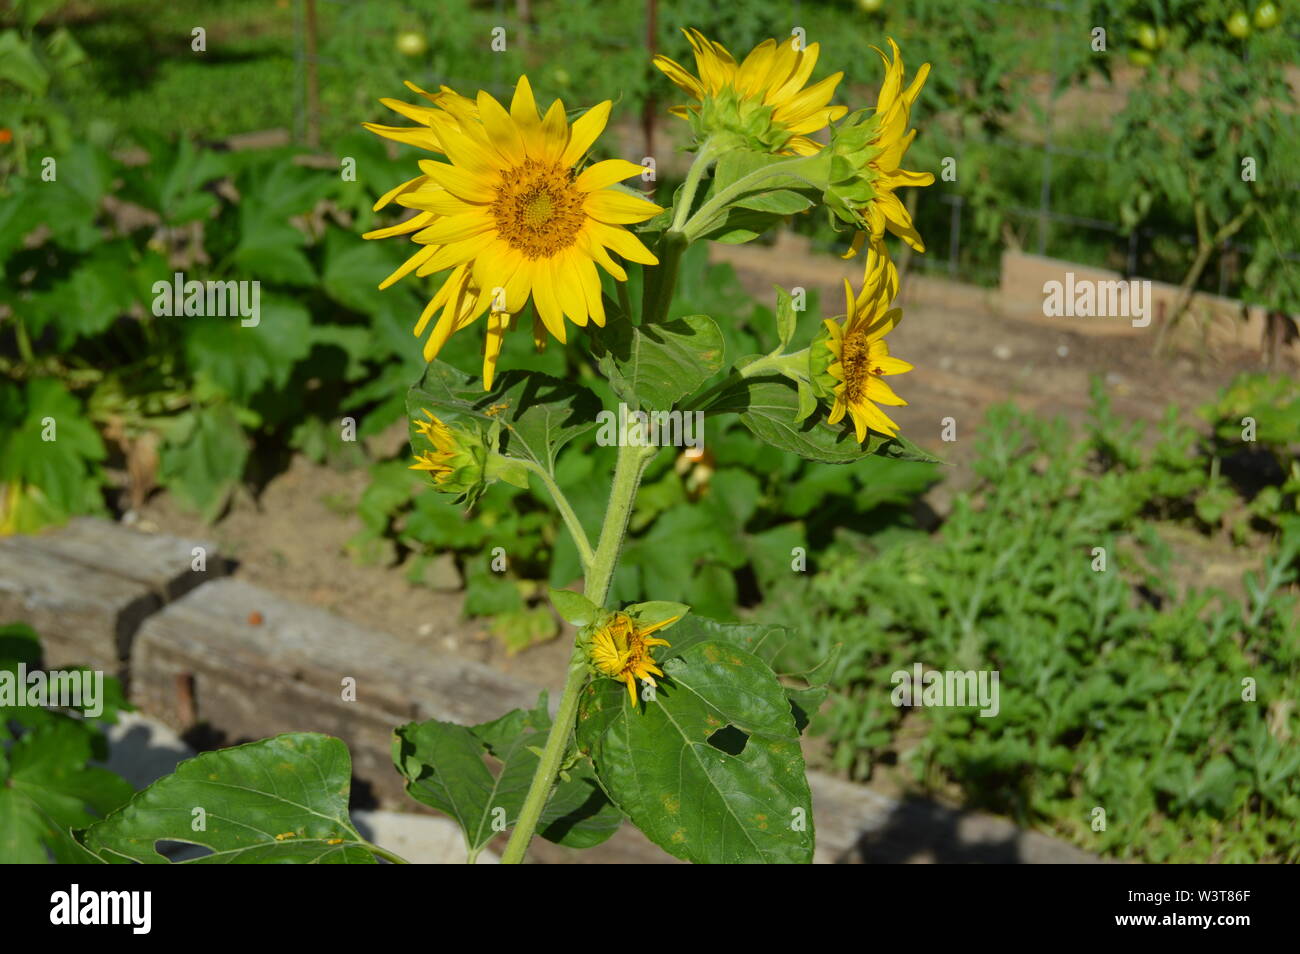 Yellow multi-head sunflower in garden Stock Photo